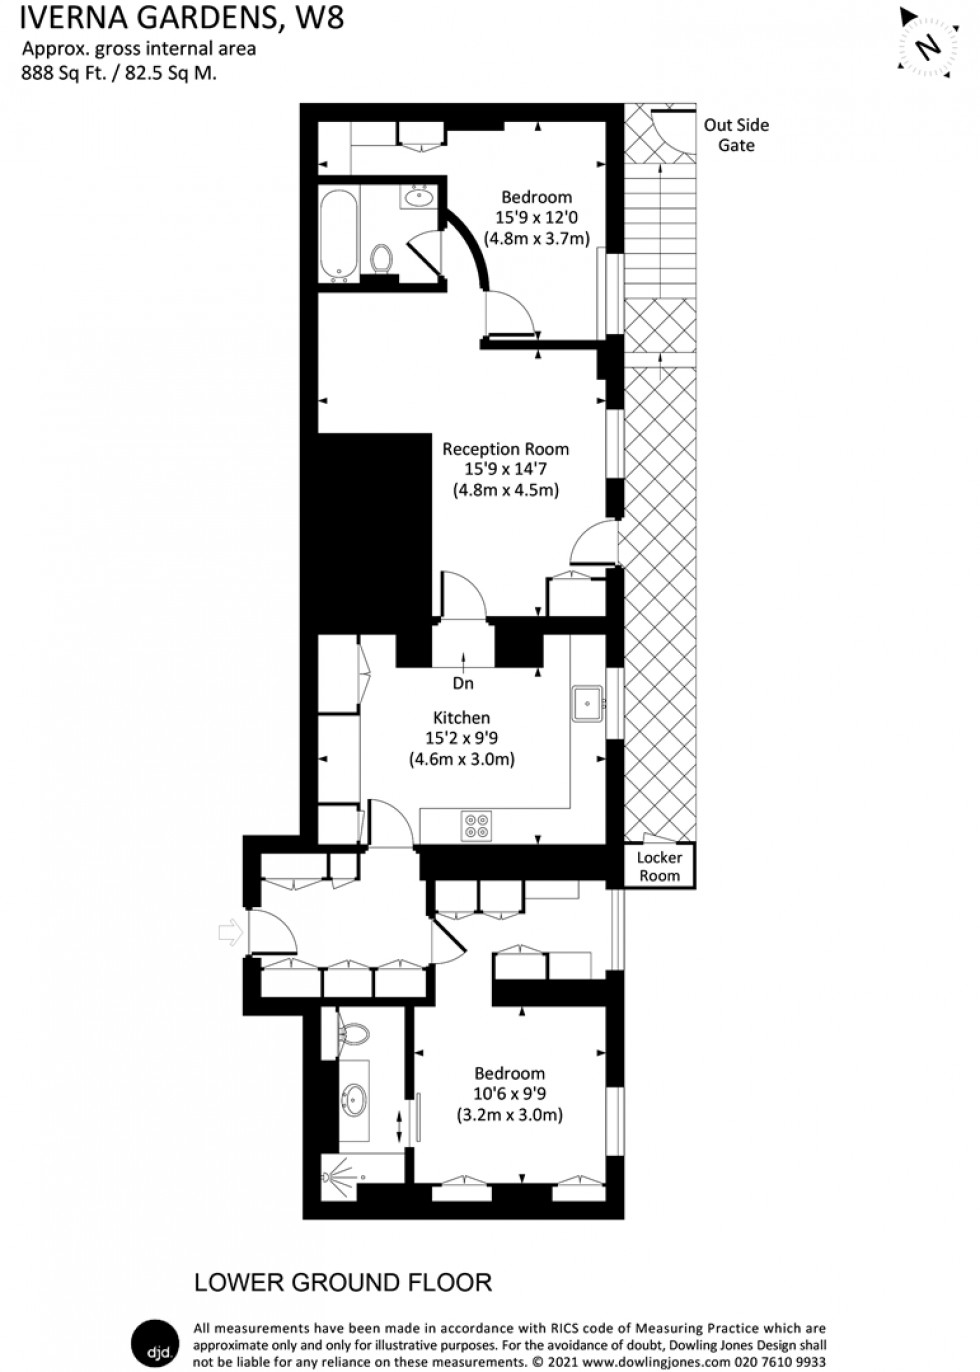 Floorplan for Iverna Gardens, Kensington, W8